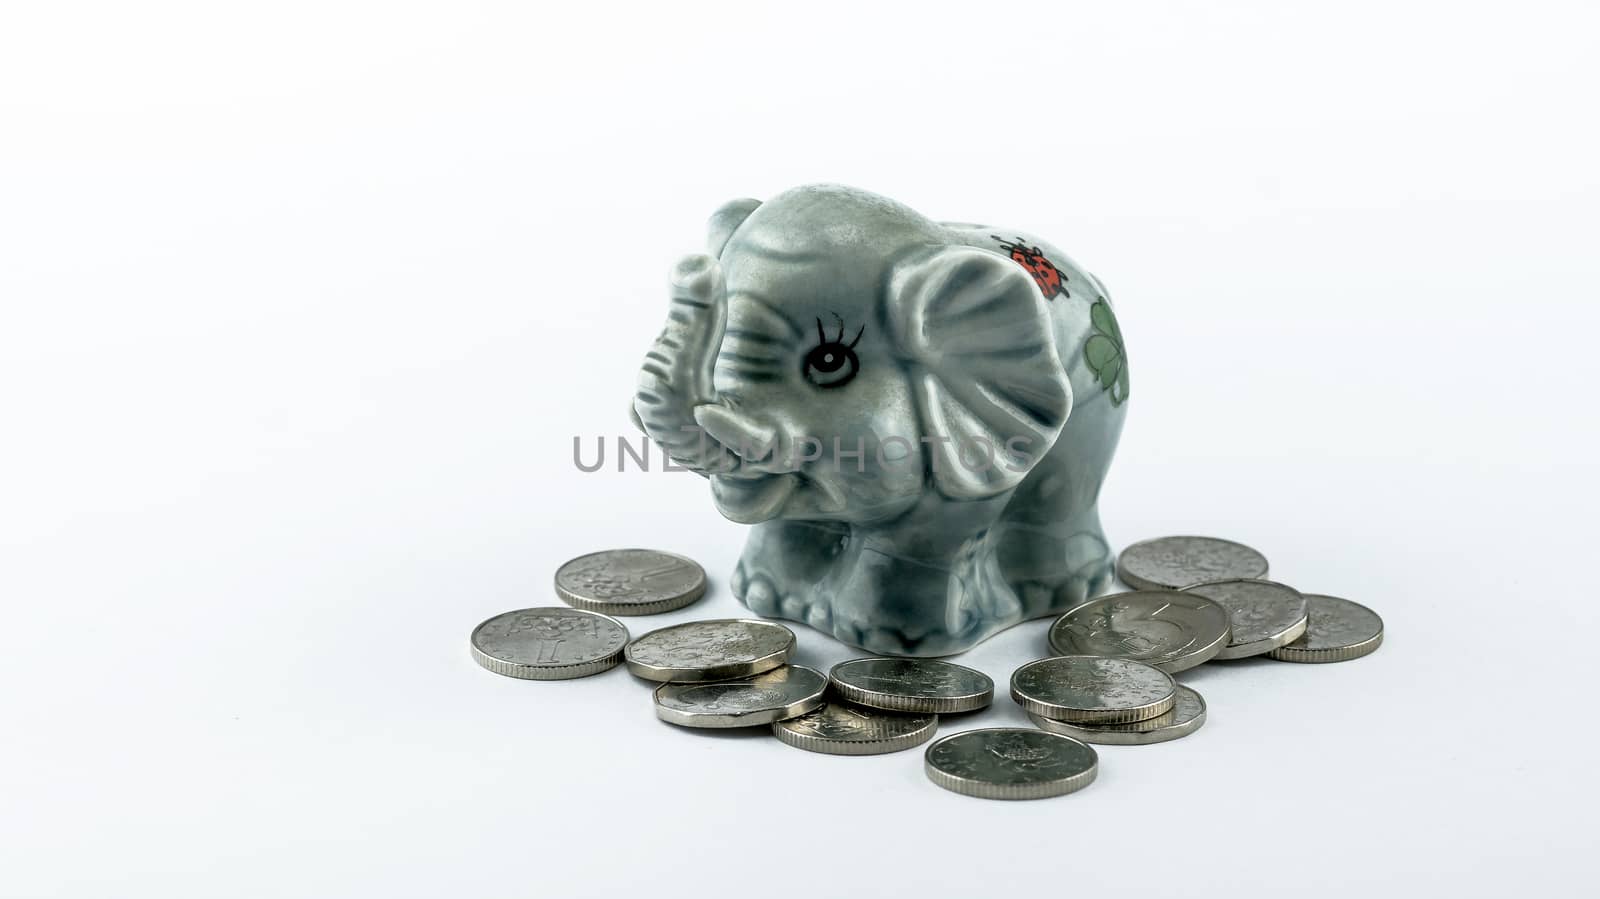 Moneybox of an elephant by 84kamila